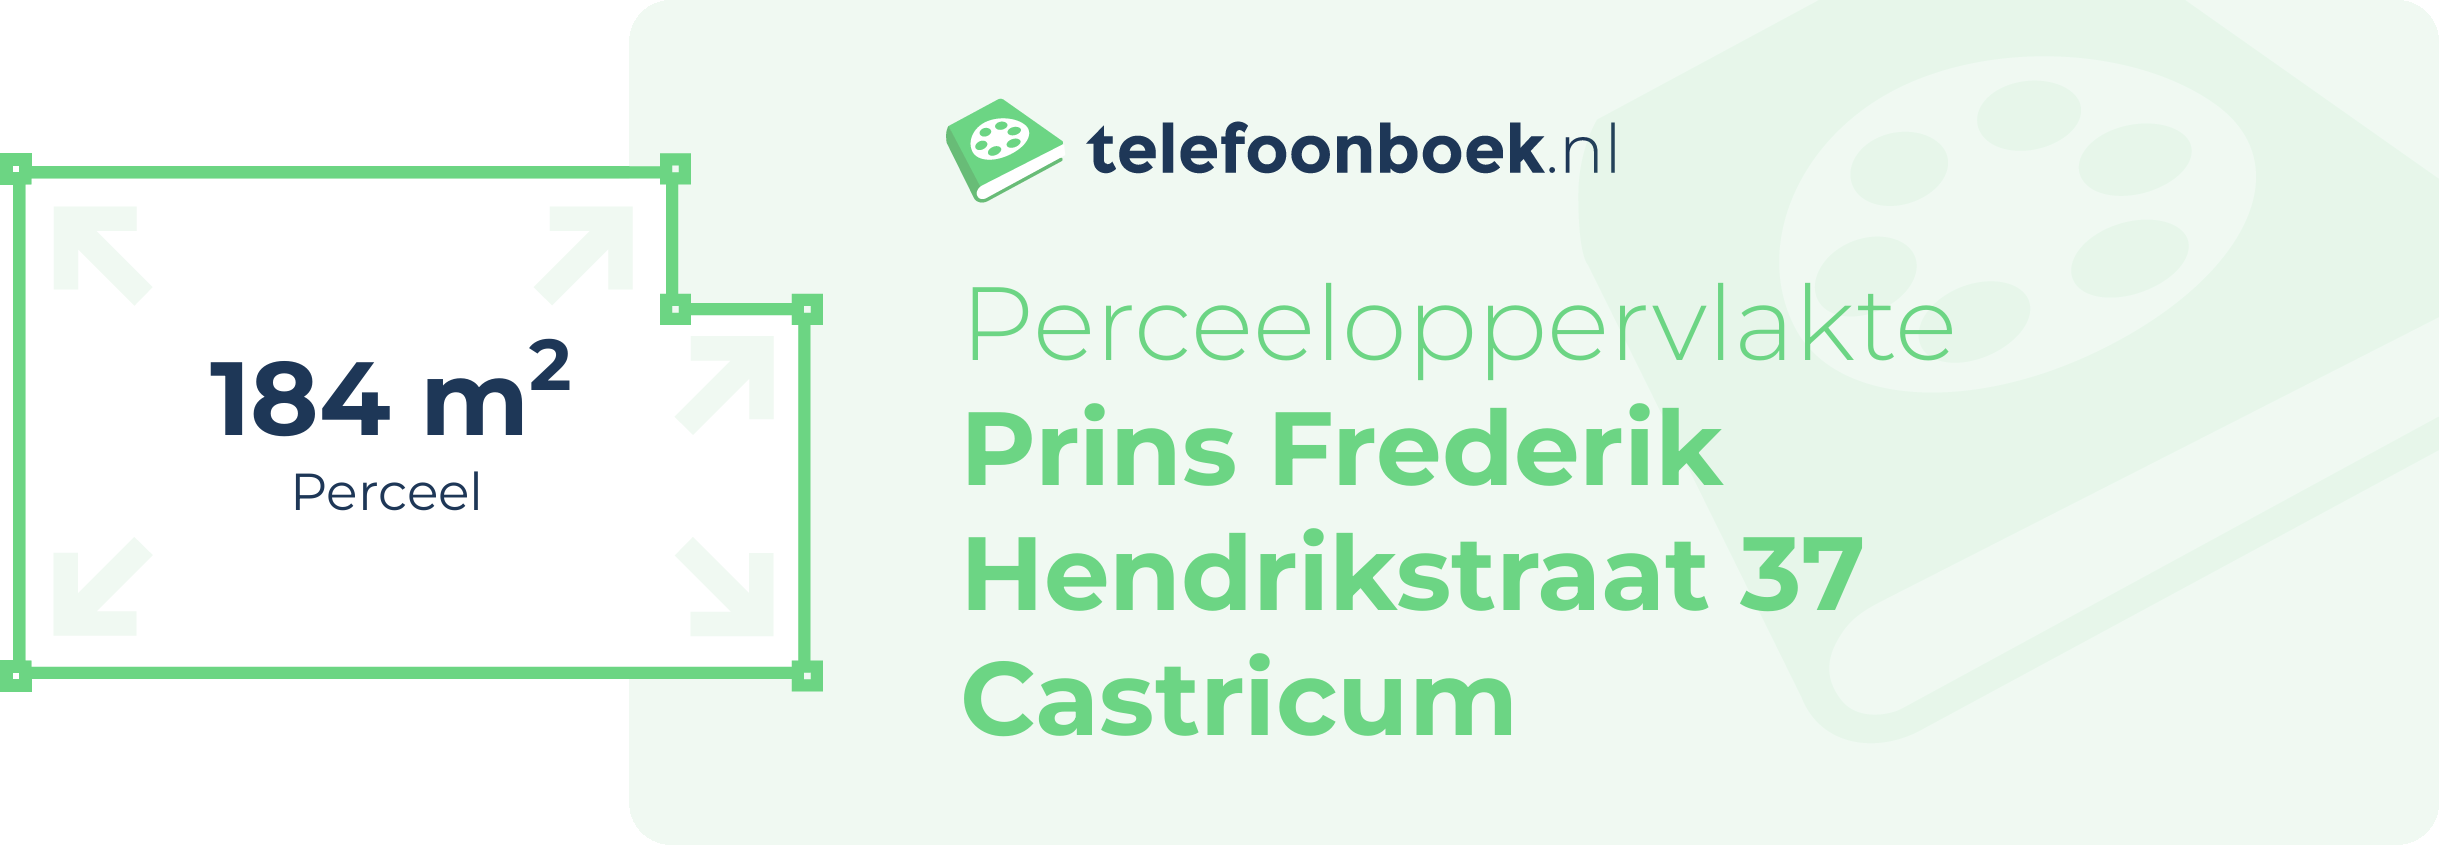 Perceeloppervlakte Prins Frederik Hendrikstraat 37 Castricum